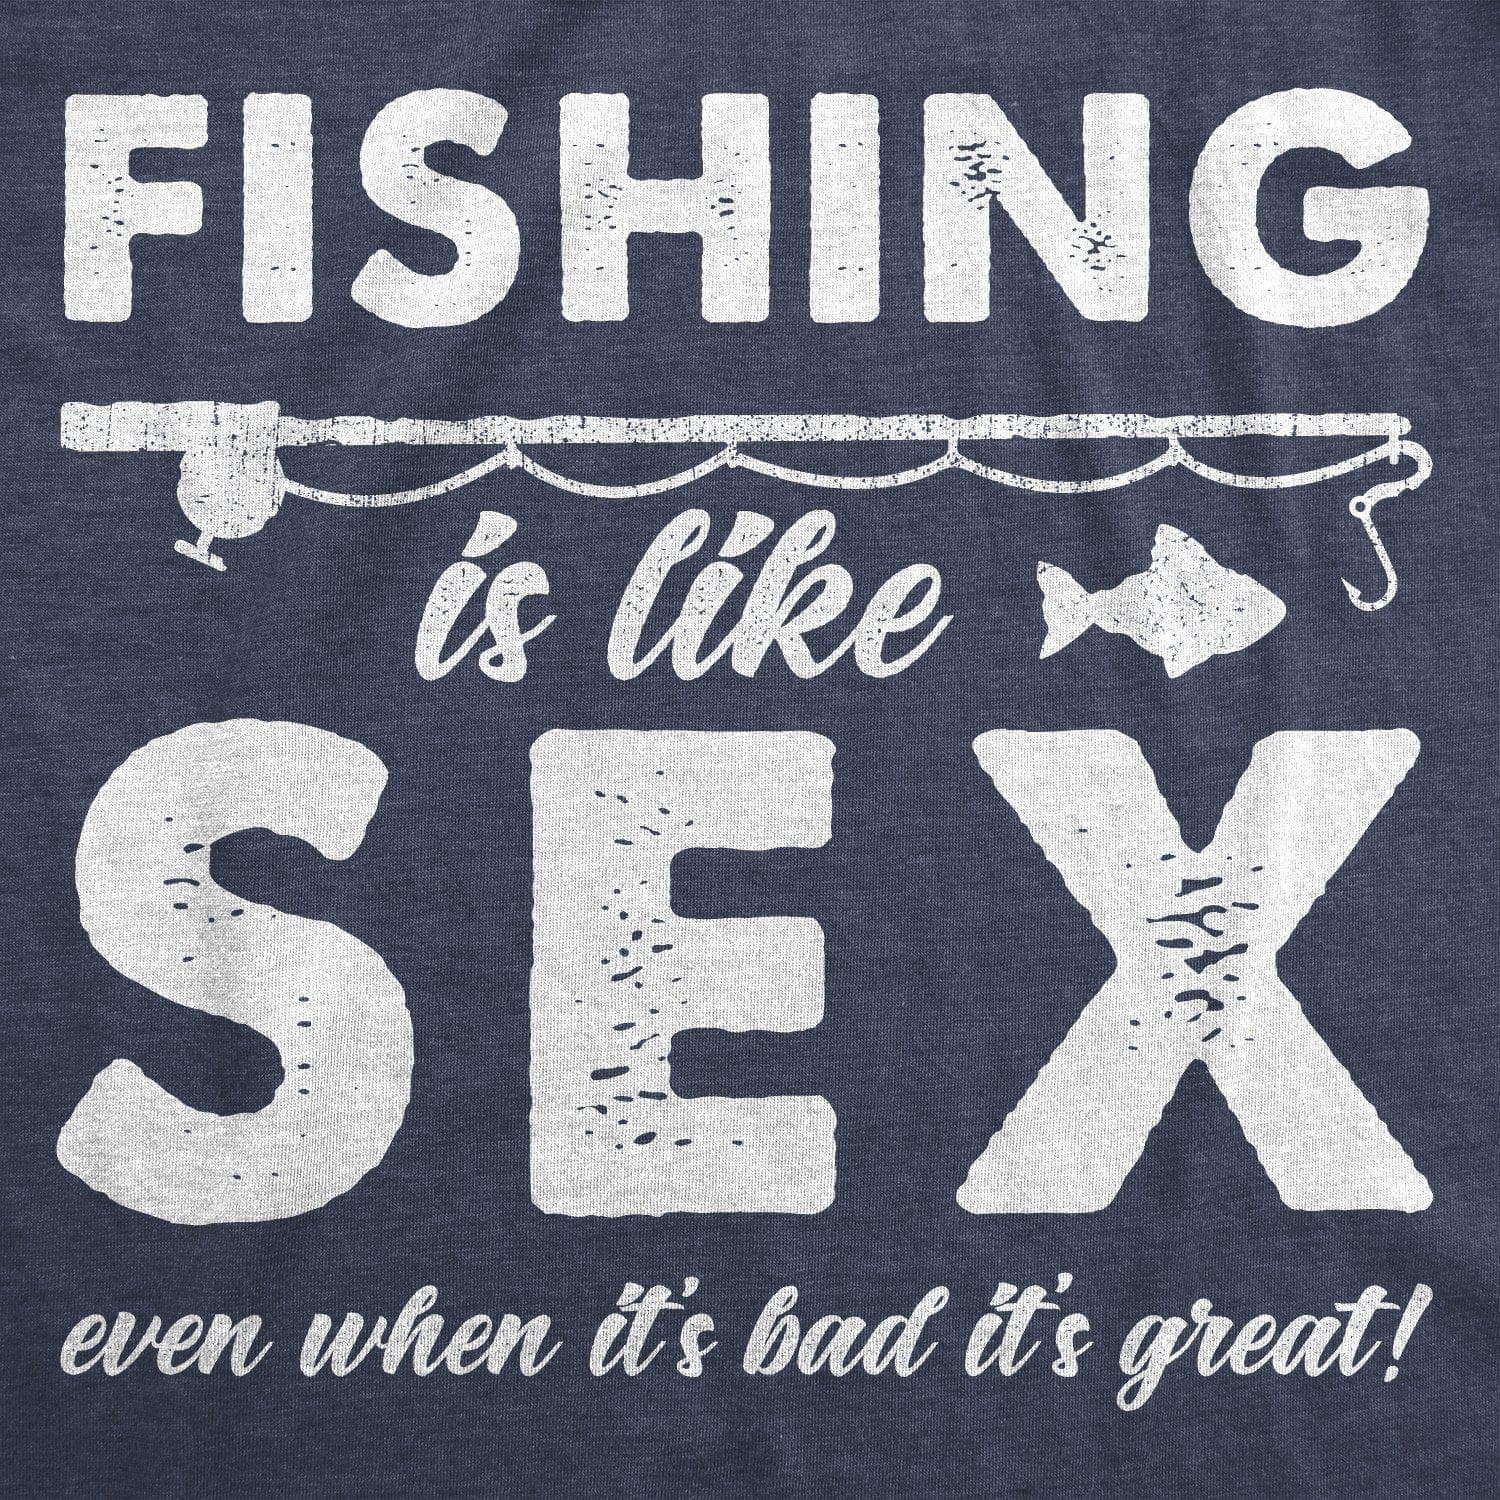 Fishing Is Like Sex Men's Tshirt - Crazy Dog T-Shirts